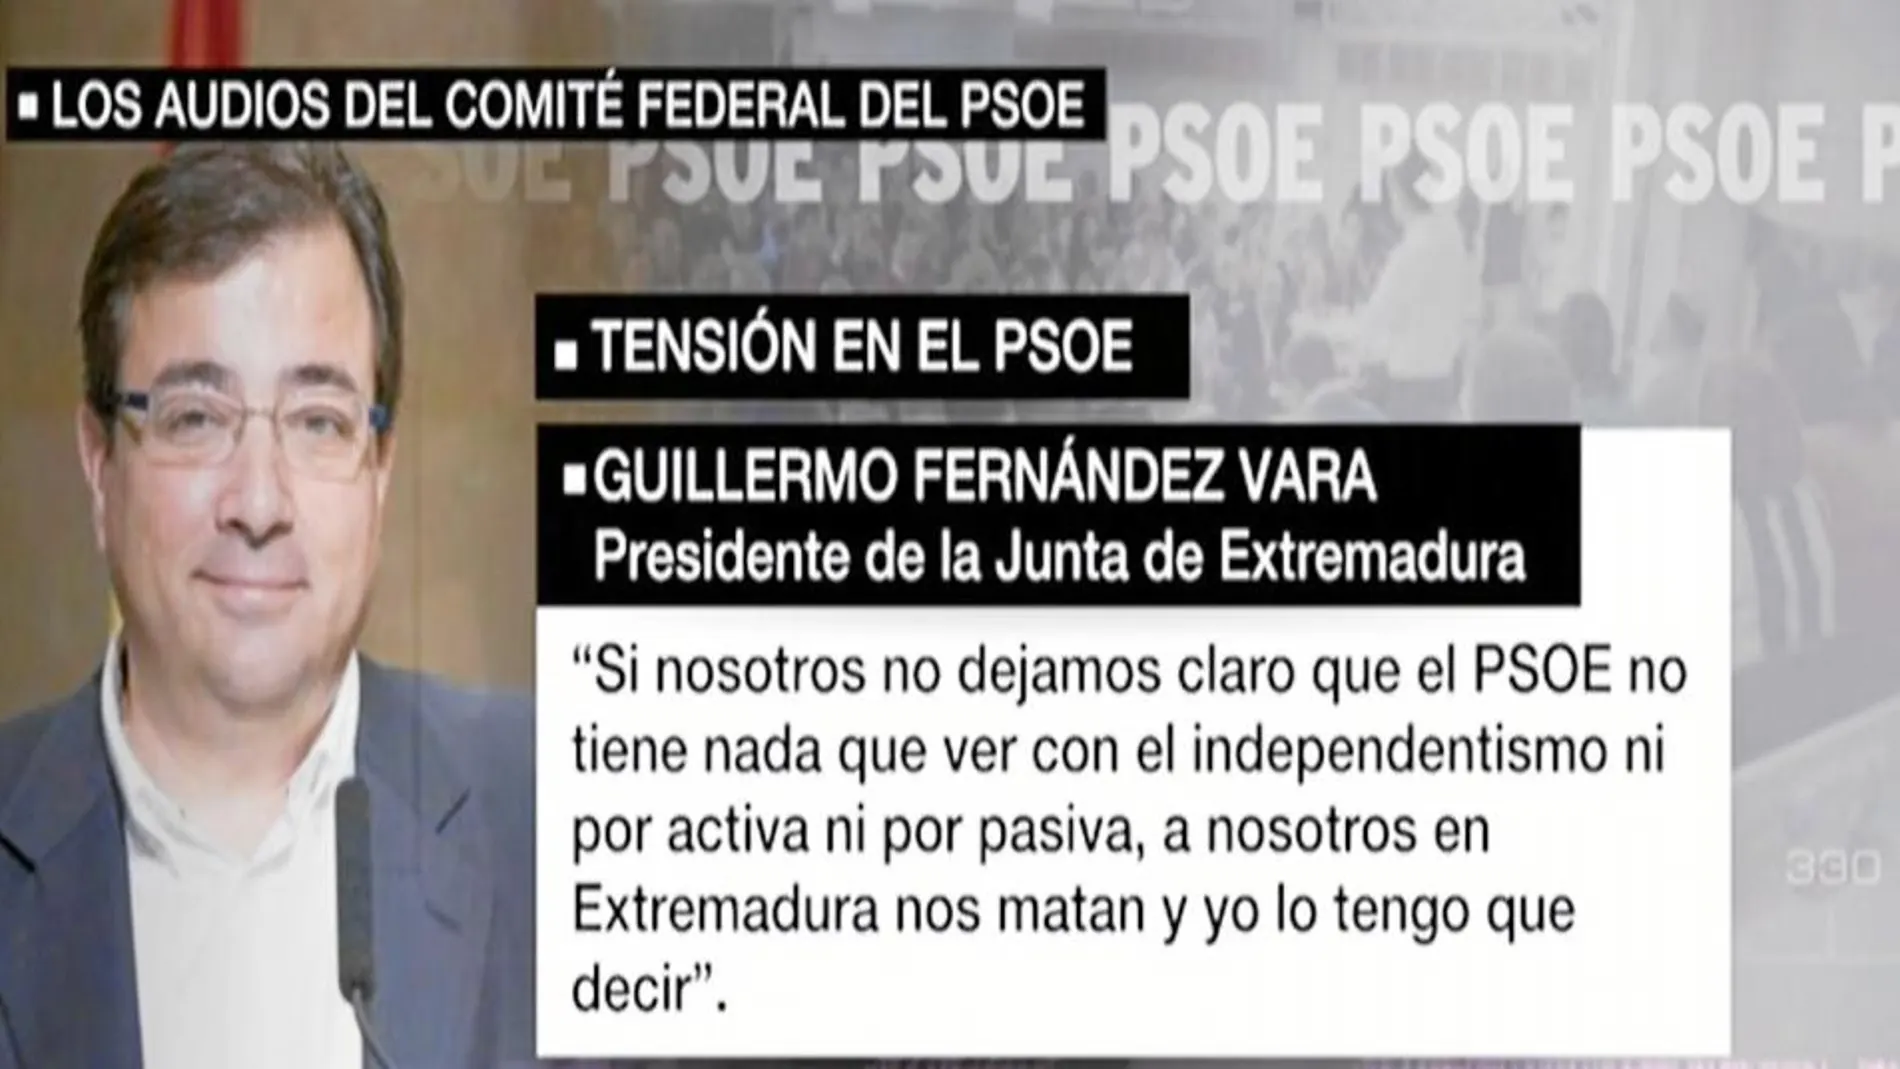 Guillermo Fernández Vara destacó os peligros en los que incurriría el partido si se apoya en partidos que quieren «partir España». «A nosotros en Extremadura nos matan»